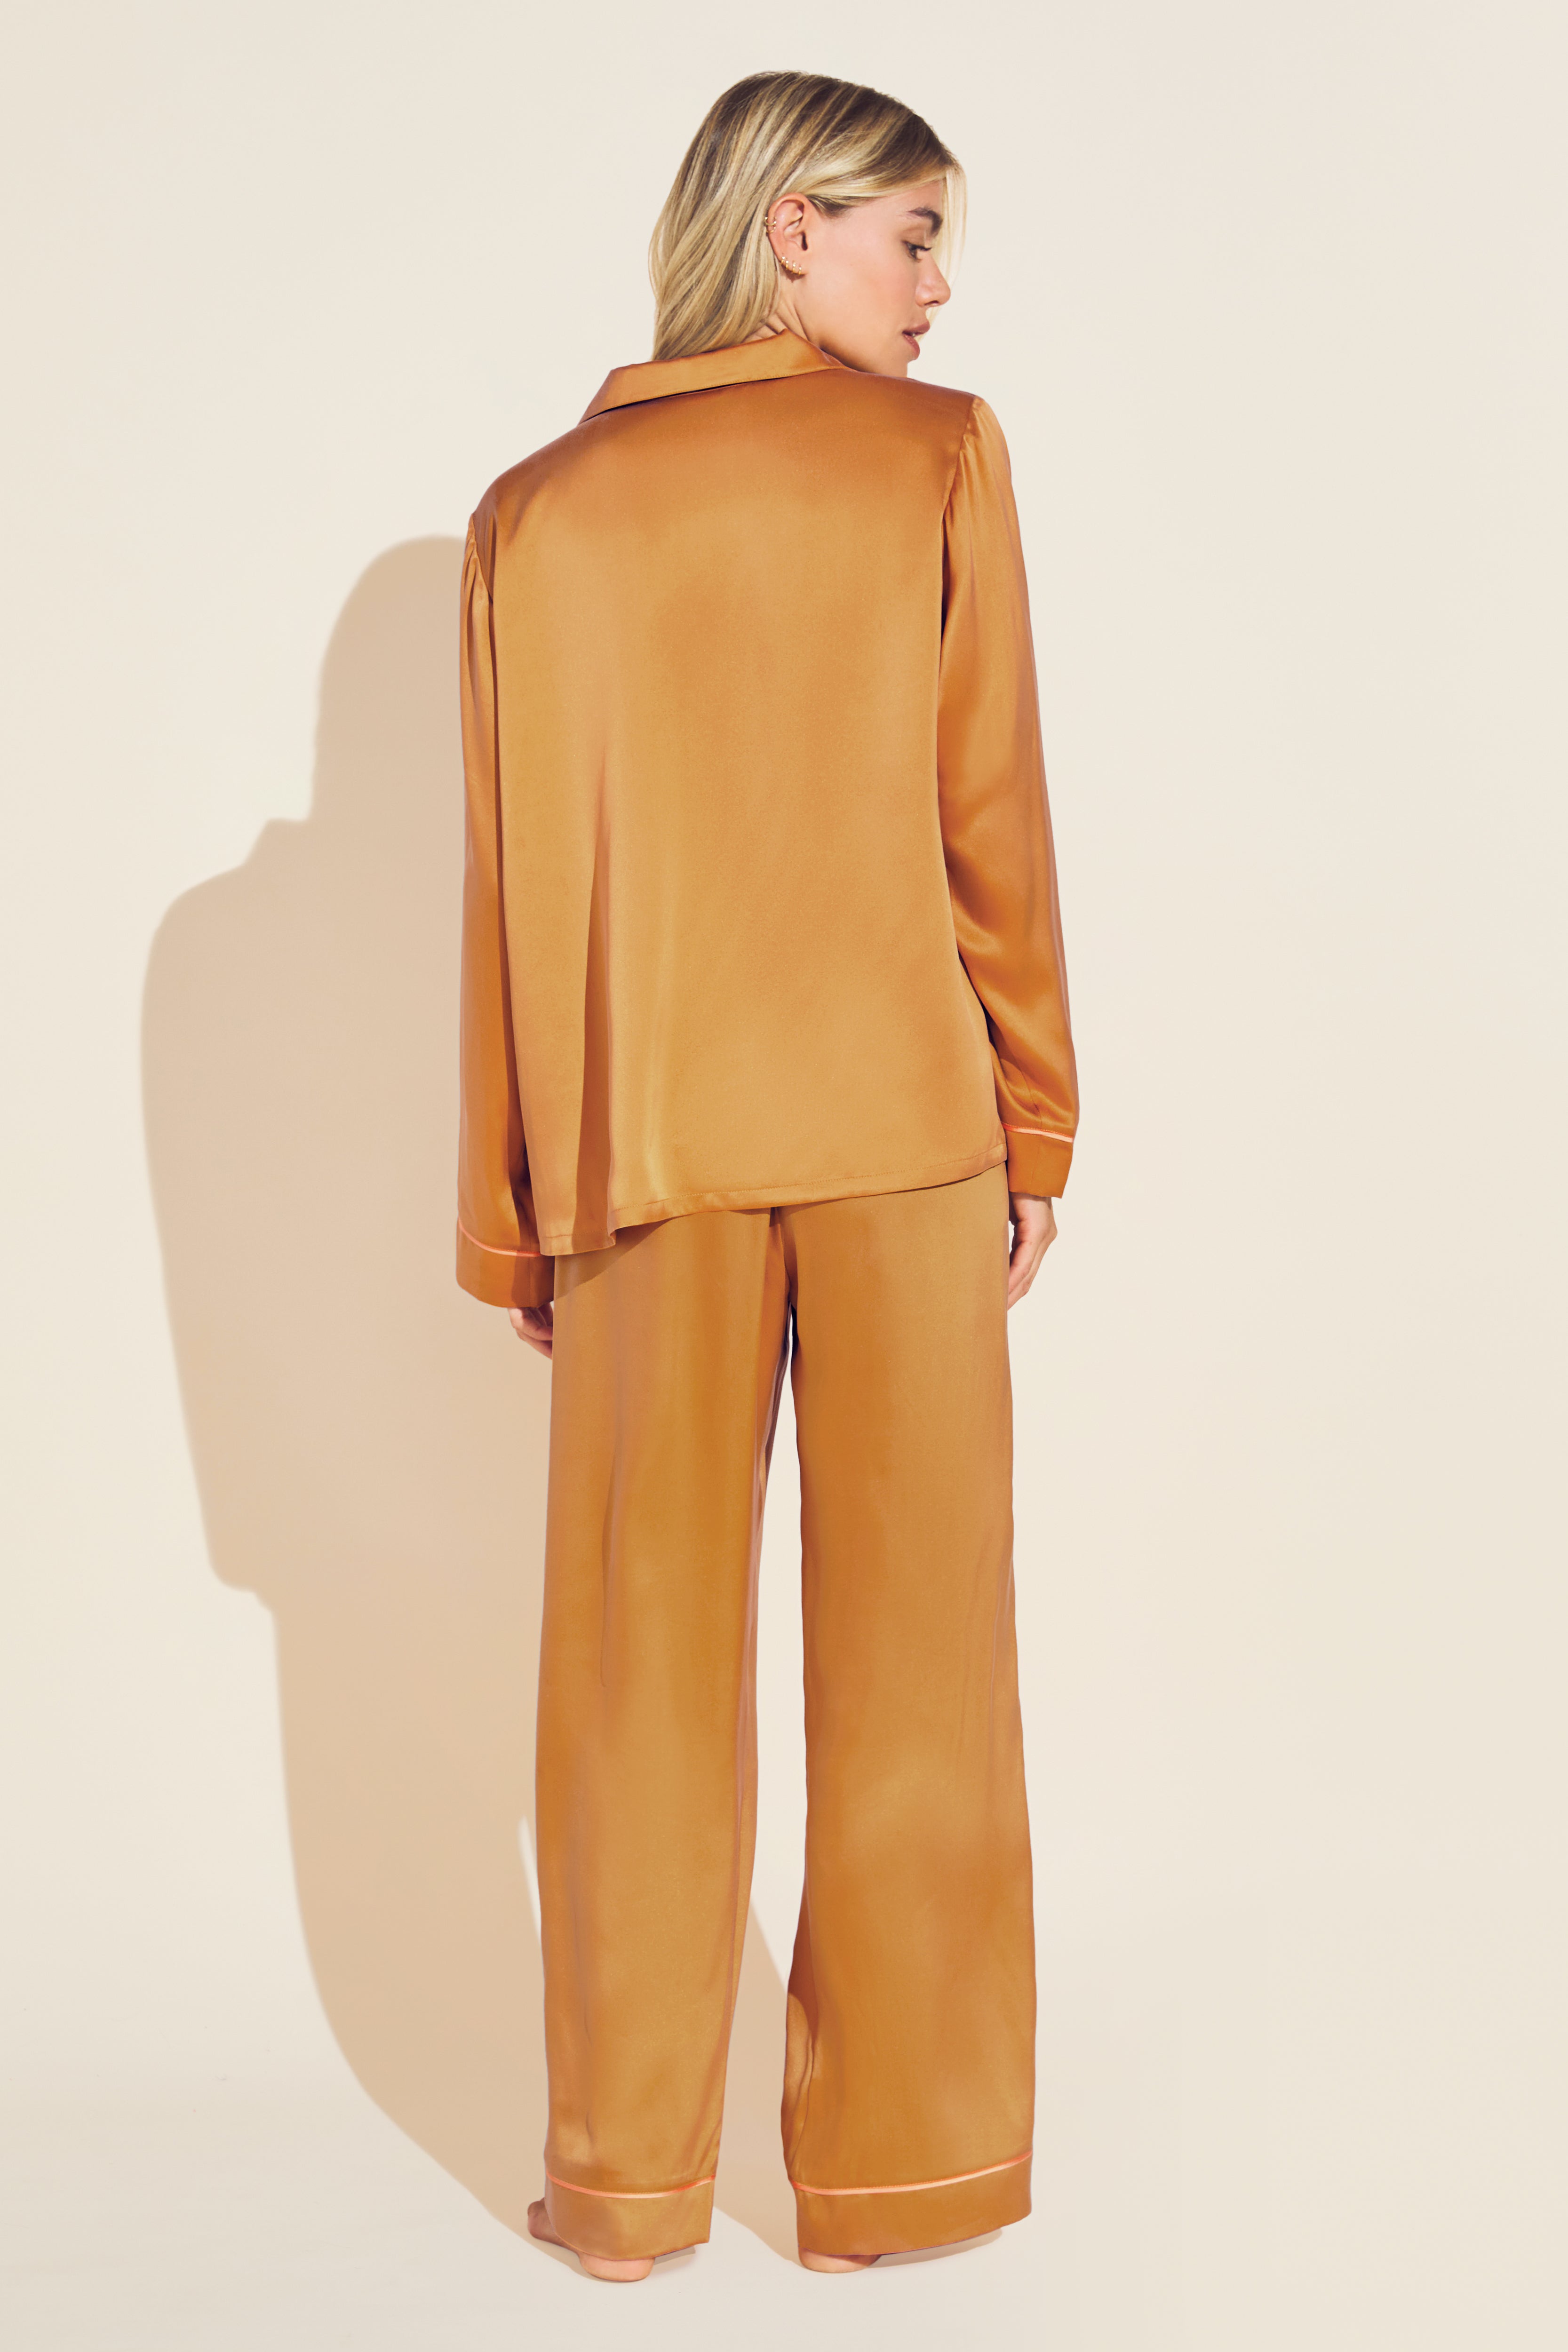 Inez Washable Silk Long PJ Set - Caramel/Bright Orange